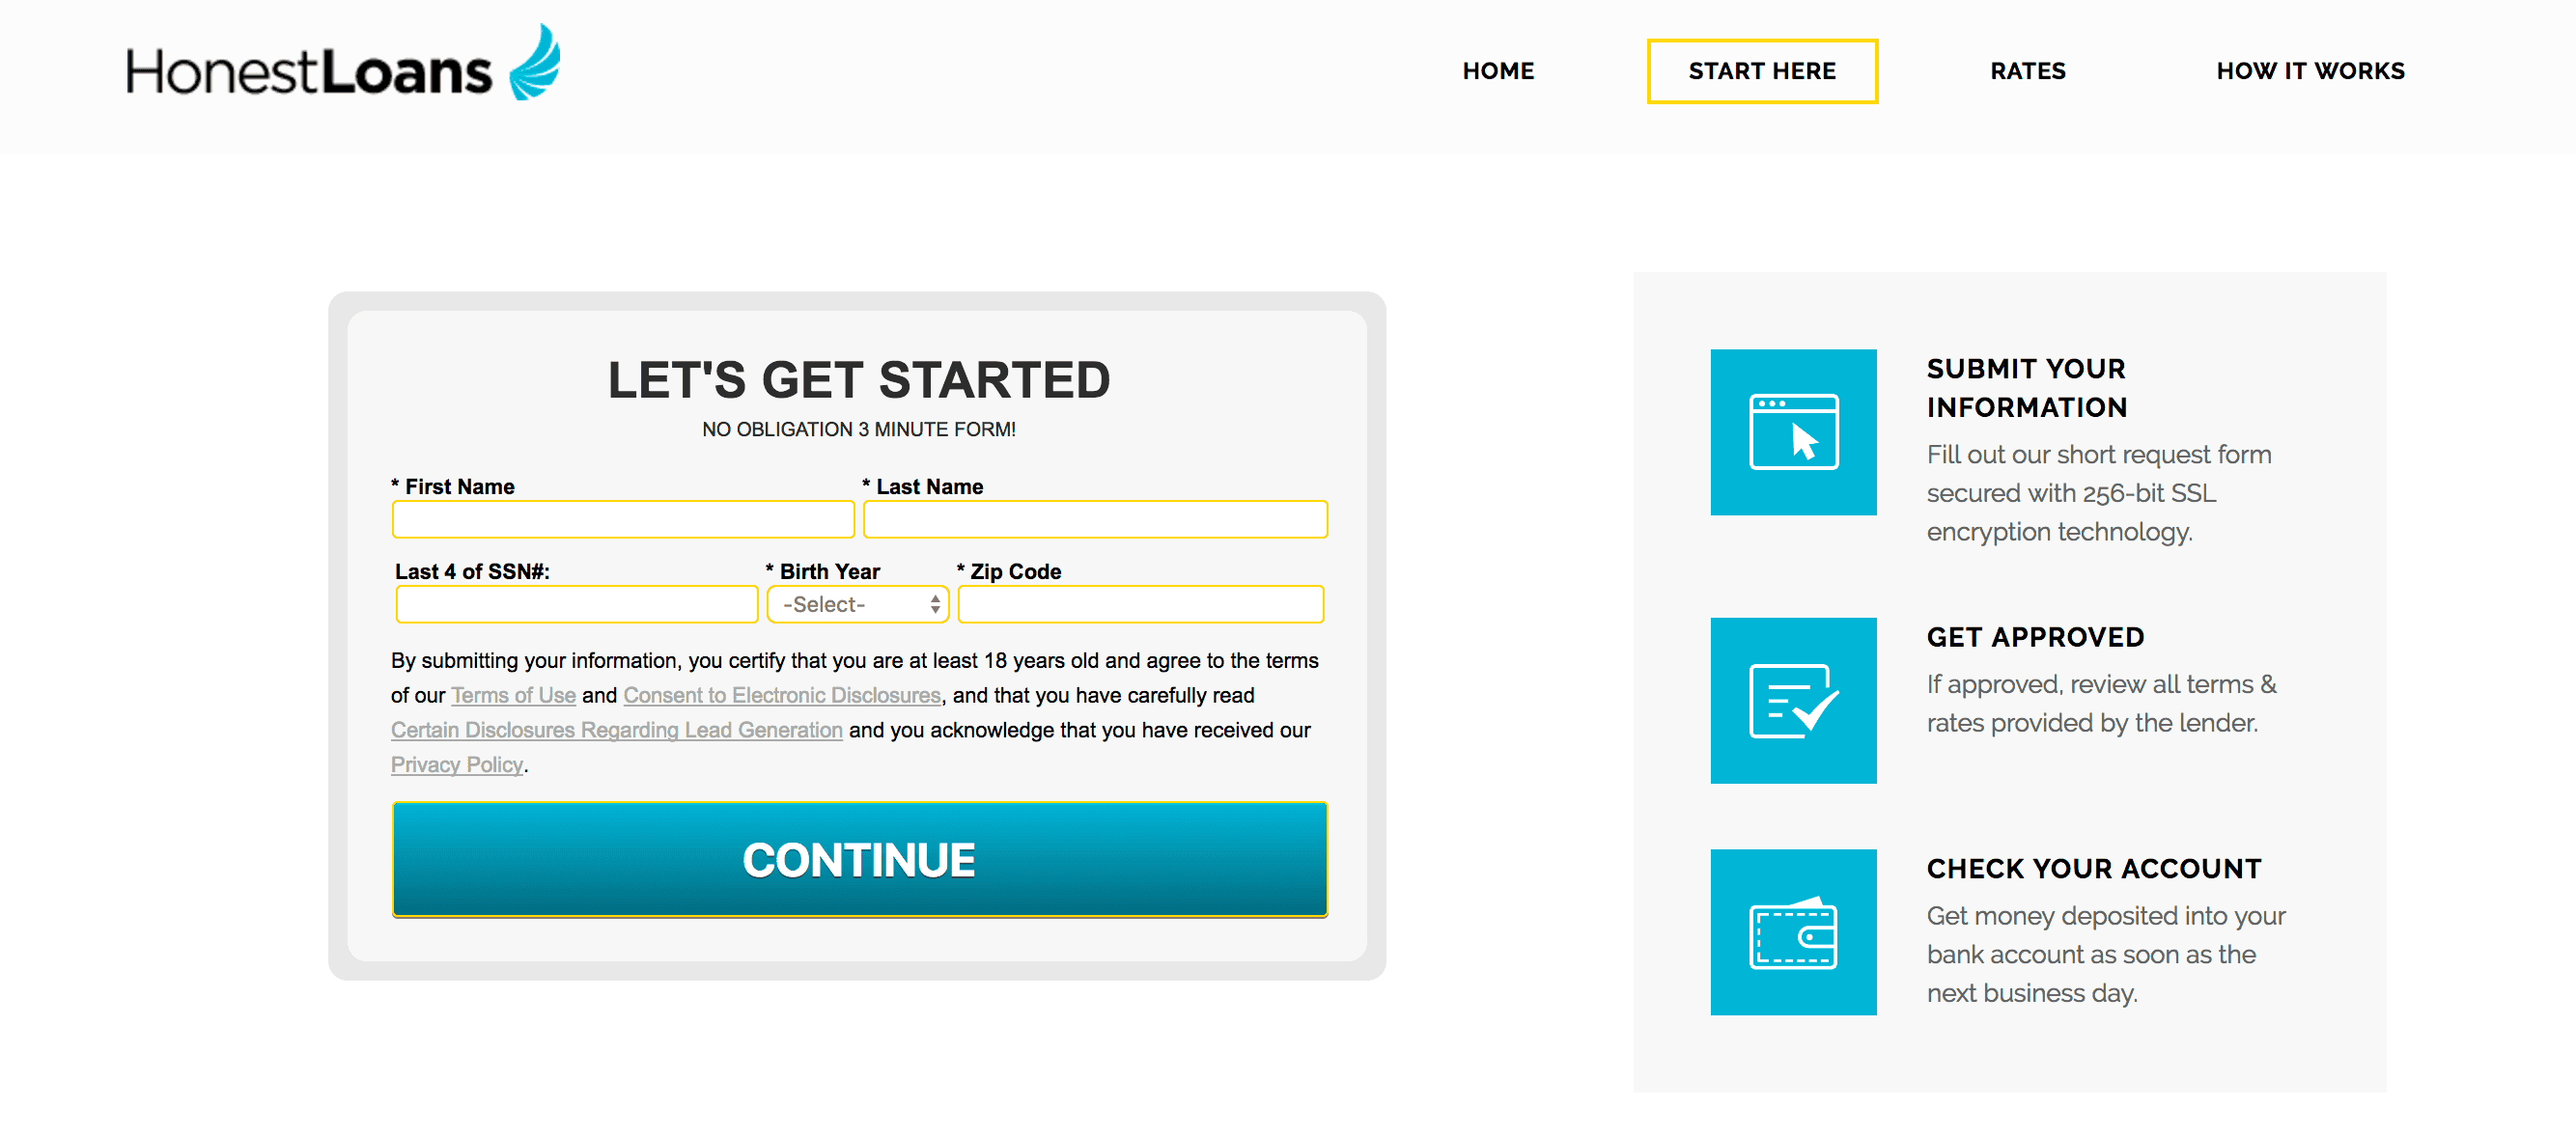 Honest Loans webpage screenshot